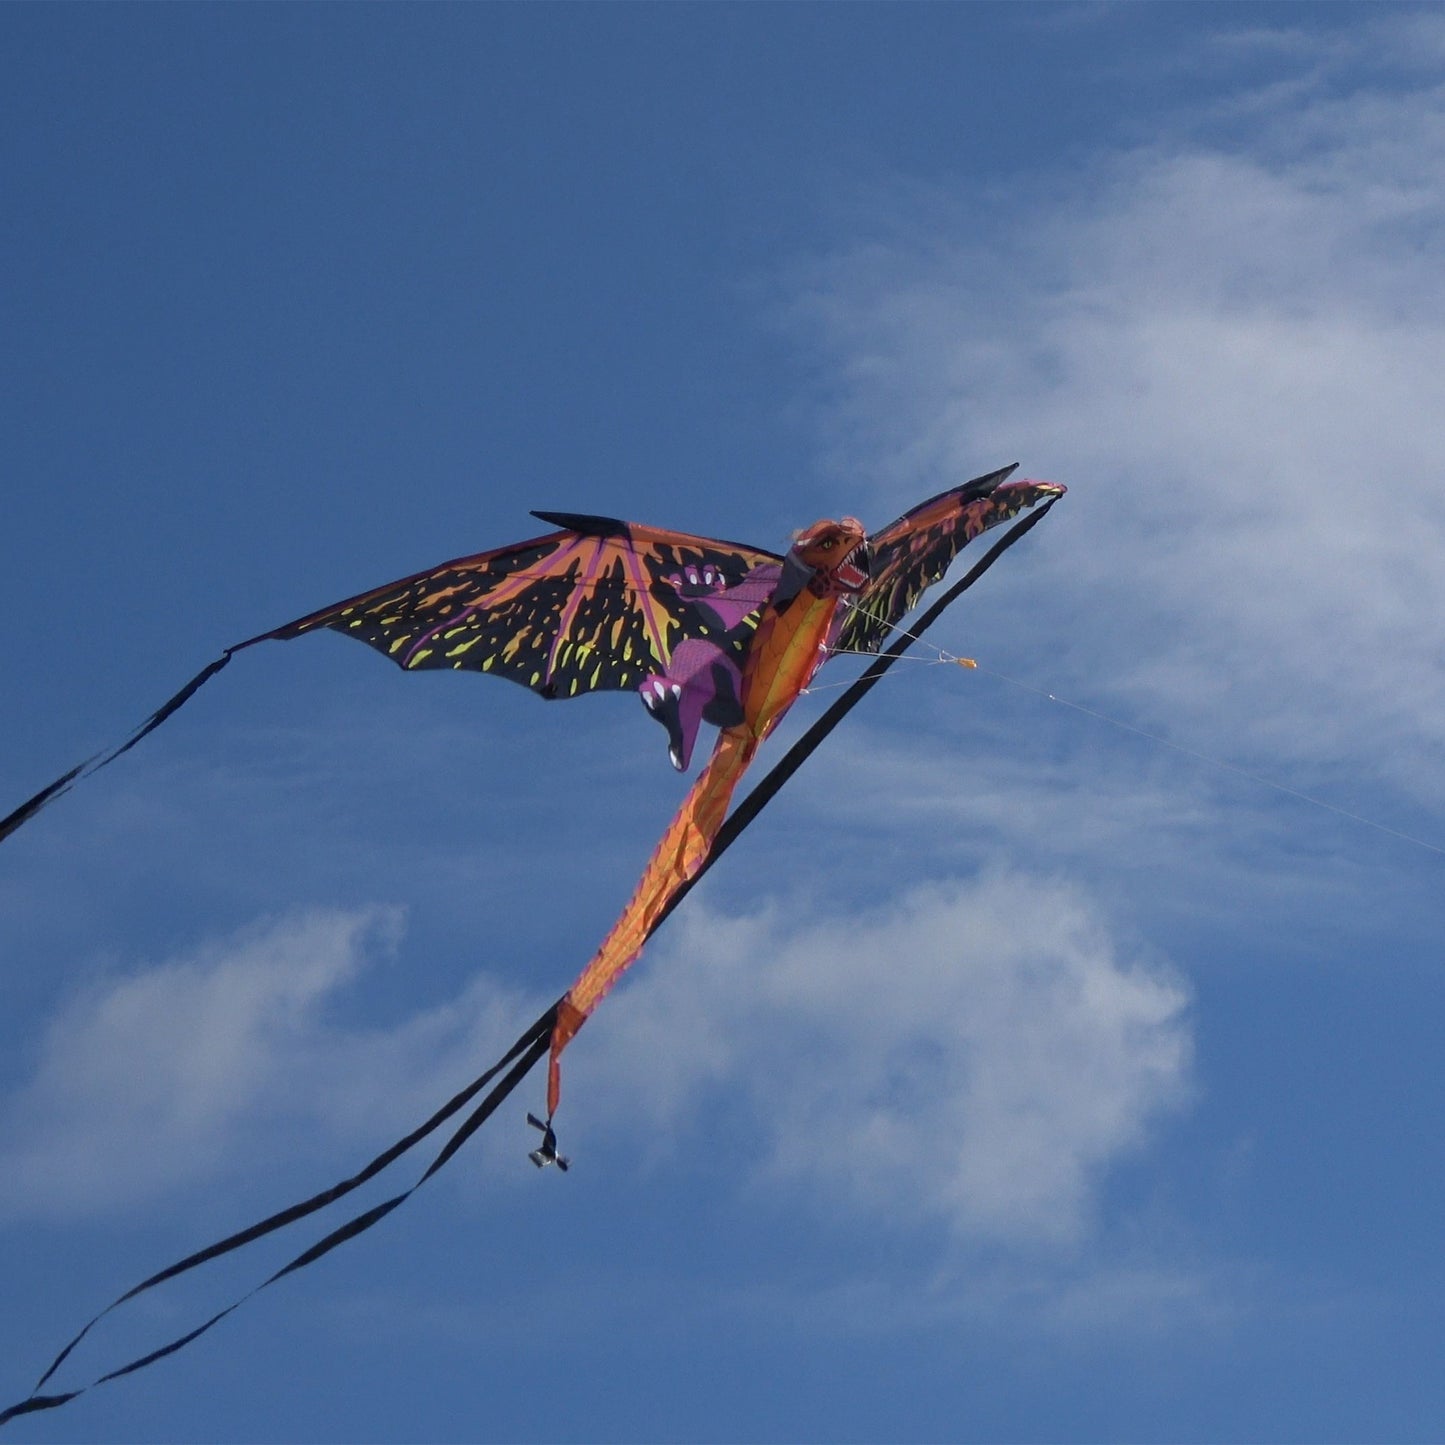 windnsun fantasyfliers 3d dragon nylon kite flying